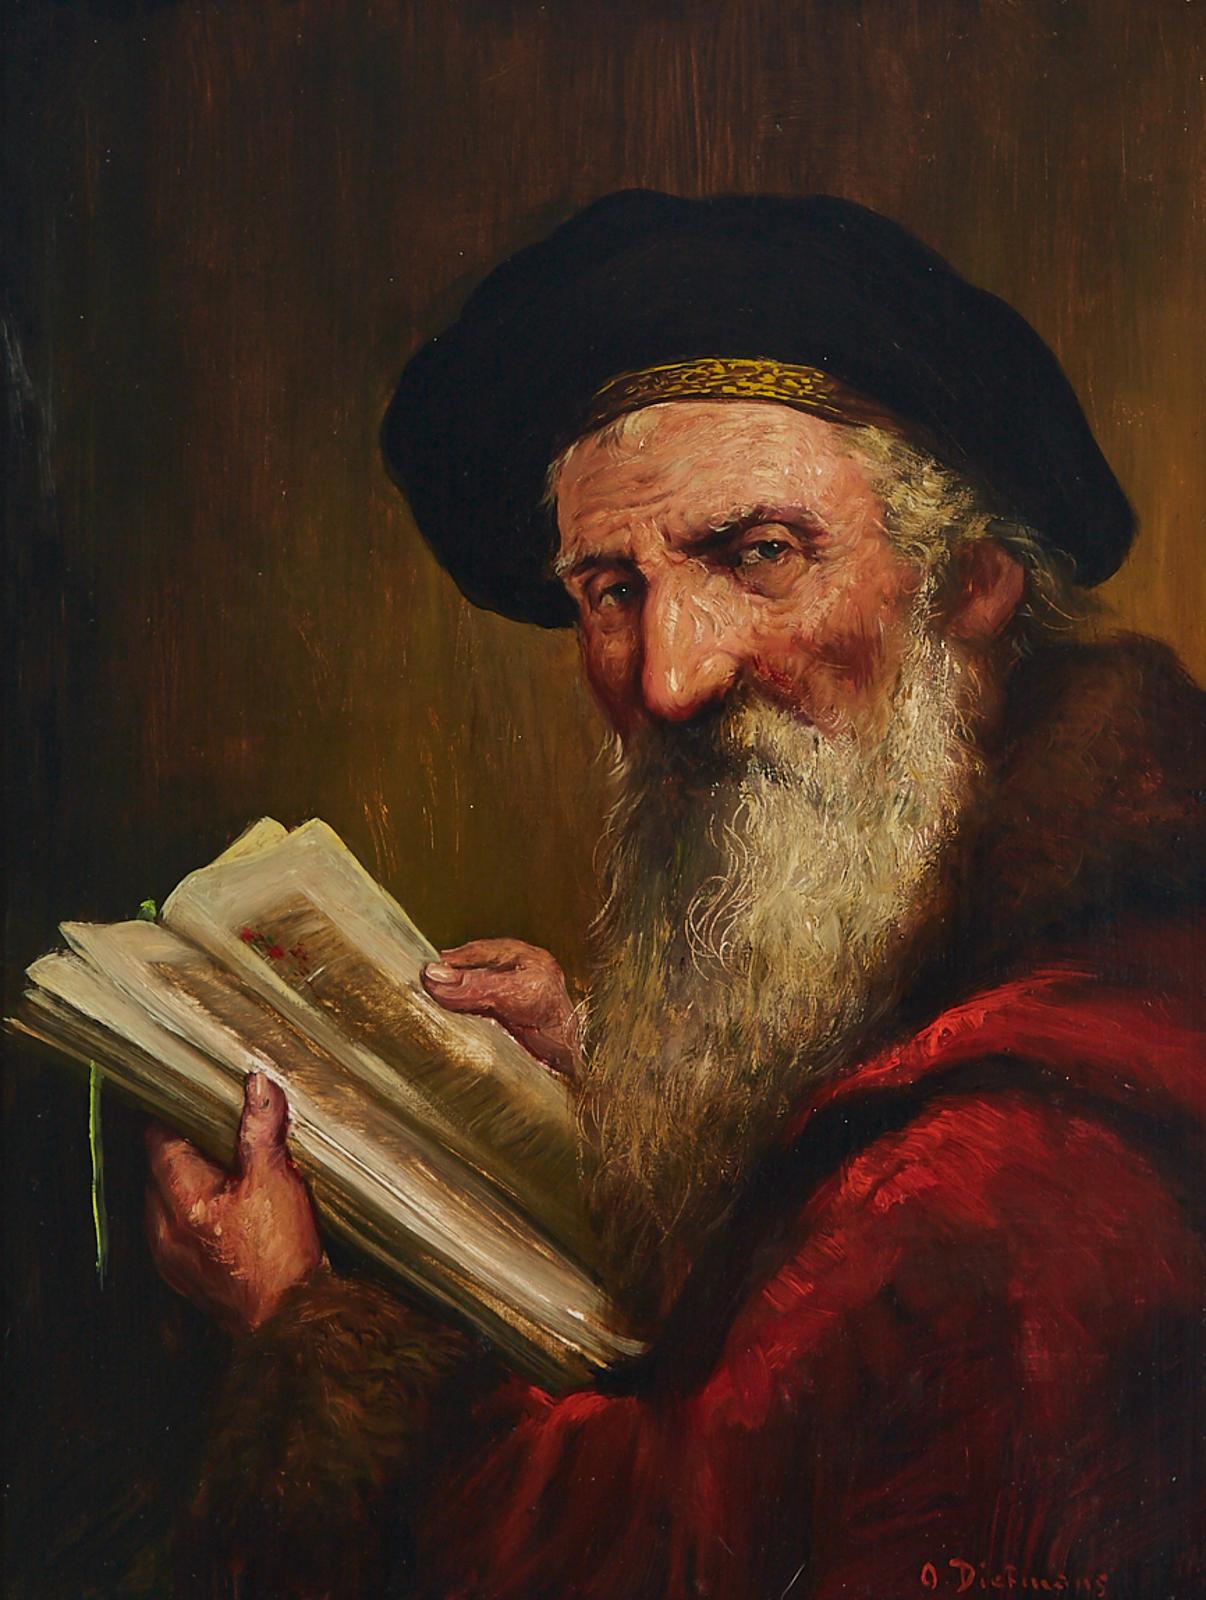 O. Dietmans - Bearded Elder In Serious Study Of A Manuscript